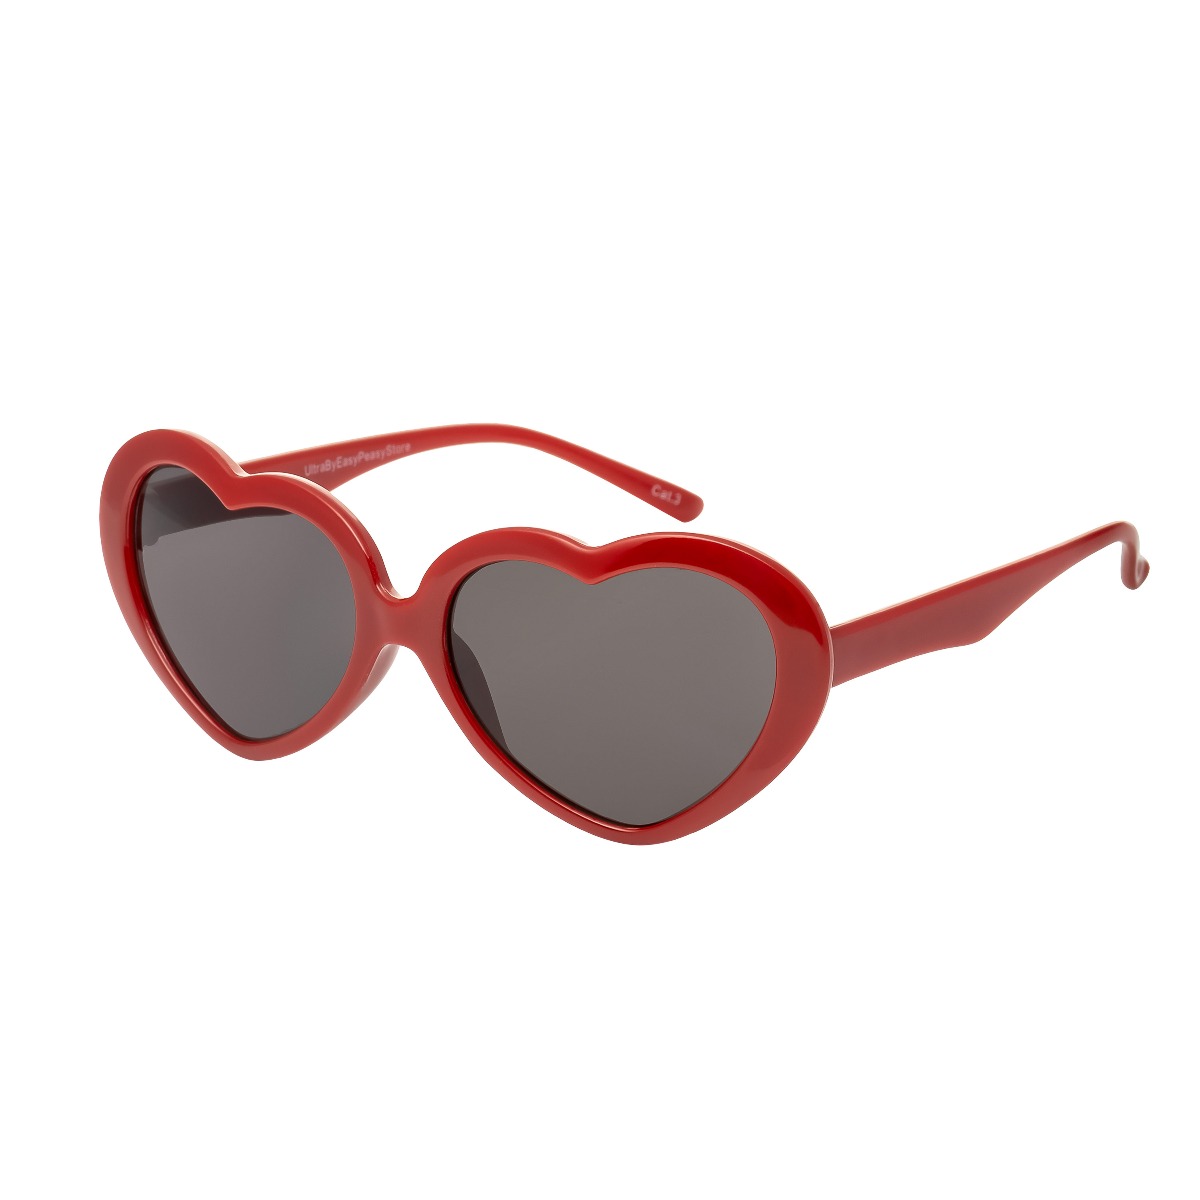 New Childrens Girls Heart Shape Love Lolita Sunglasses UV400 #P1303 